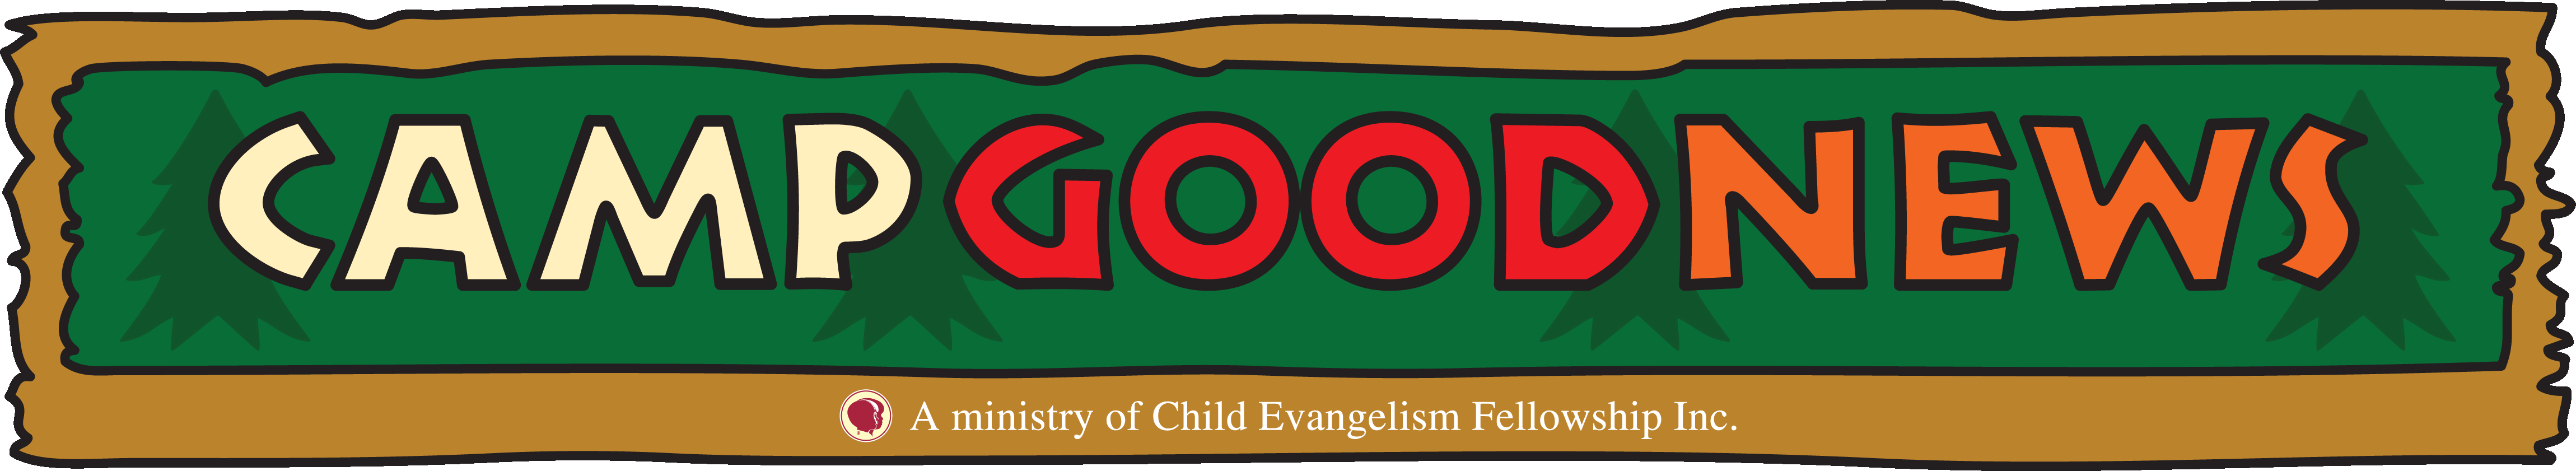 Camp Good News logo